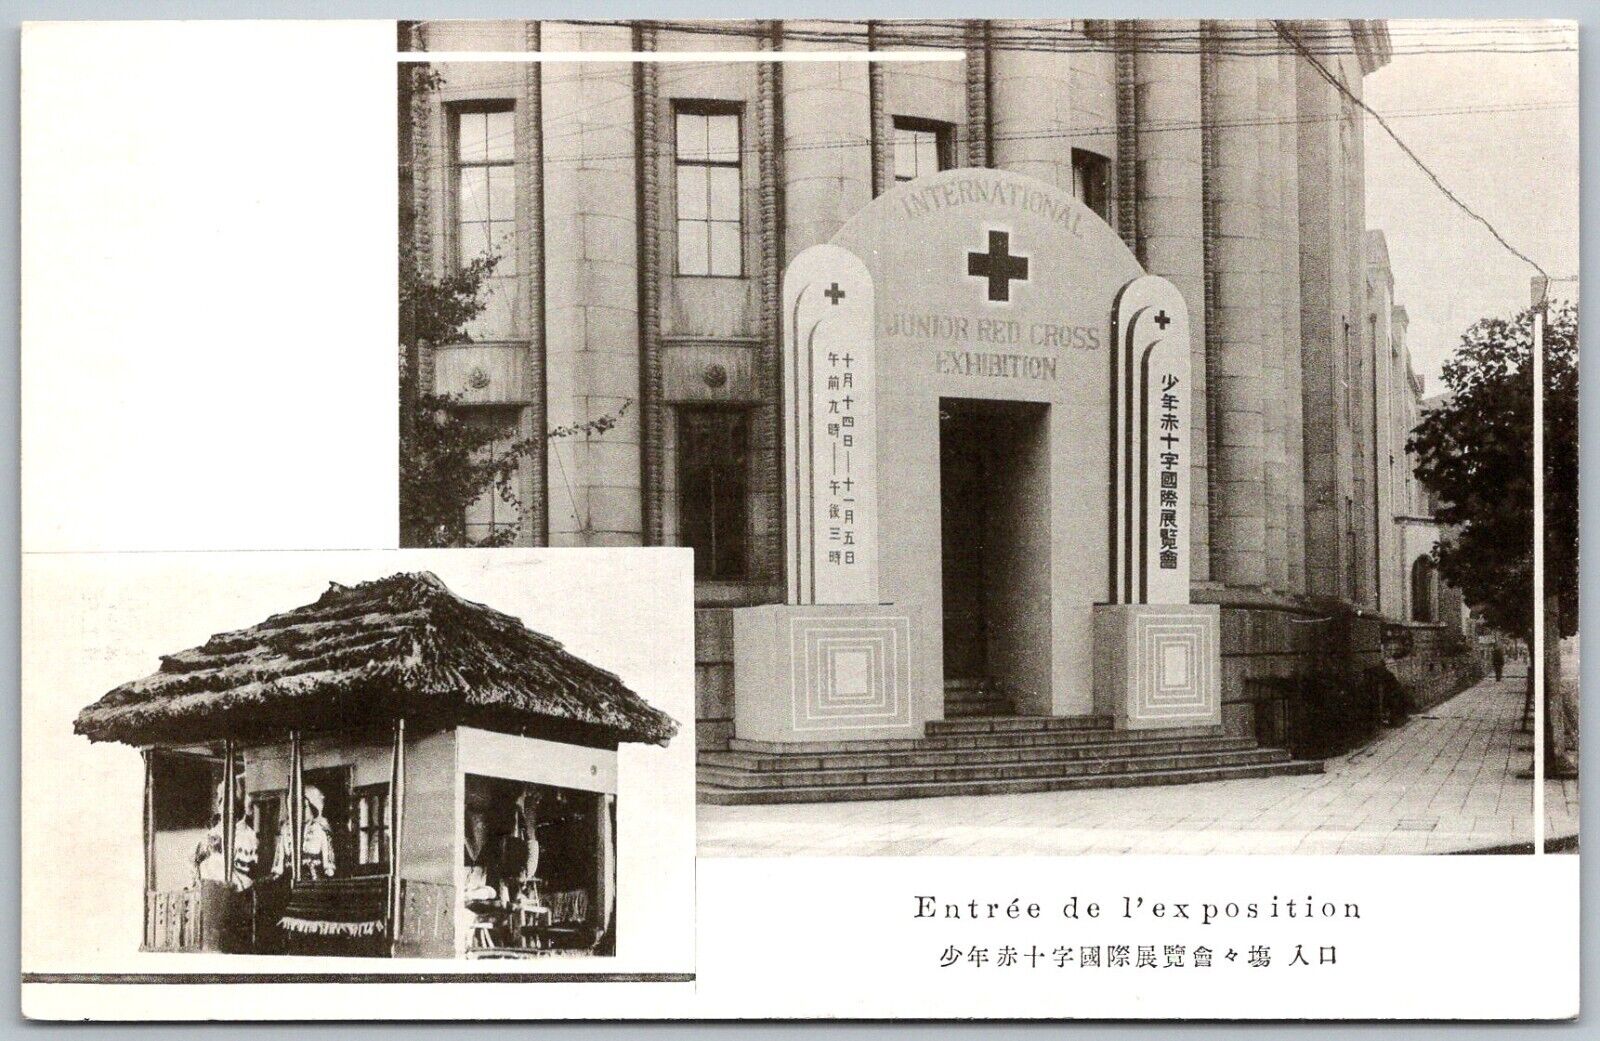 Japan 1920s Postcard International Junior Red Cross Exhibition Exposition